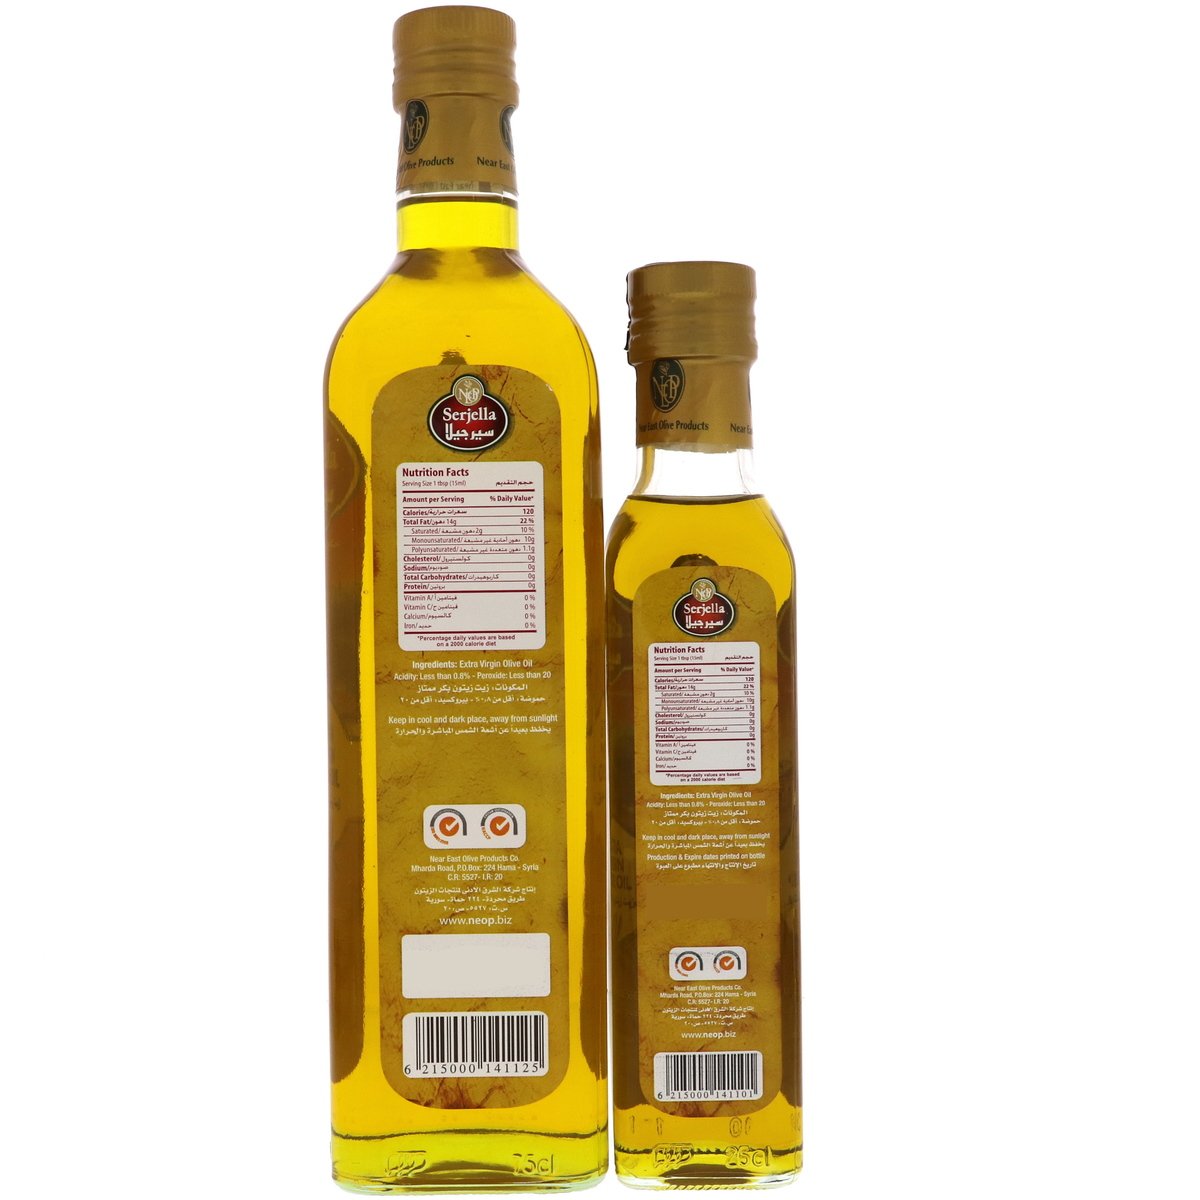 Serjella Extra Virgin Olive Oil 750 ml + Offer